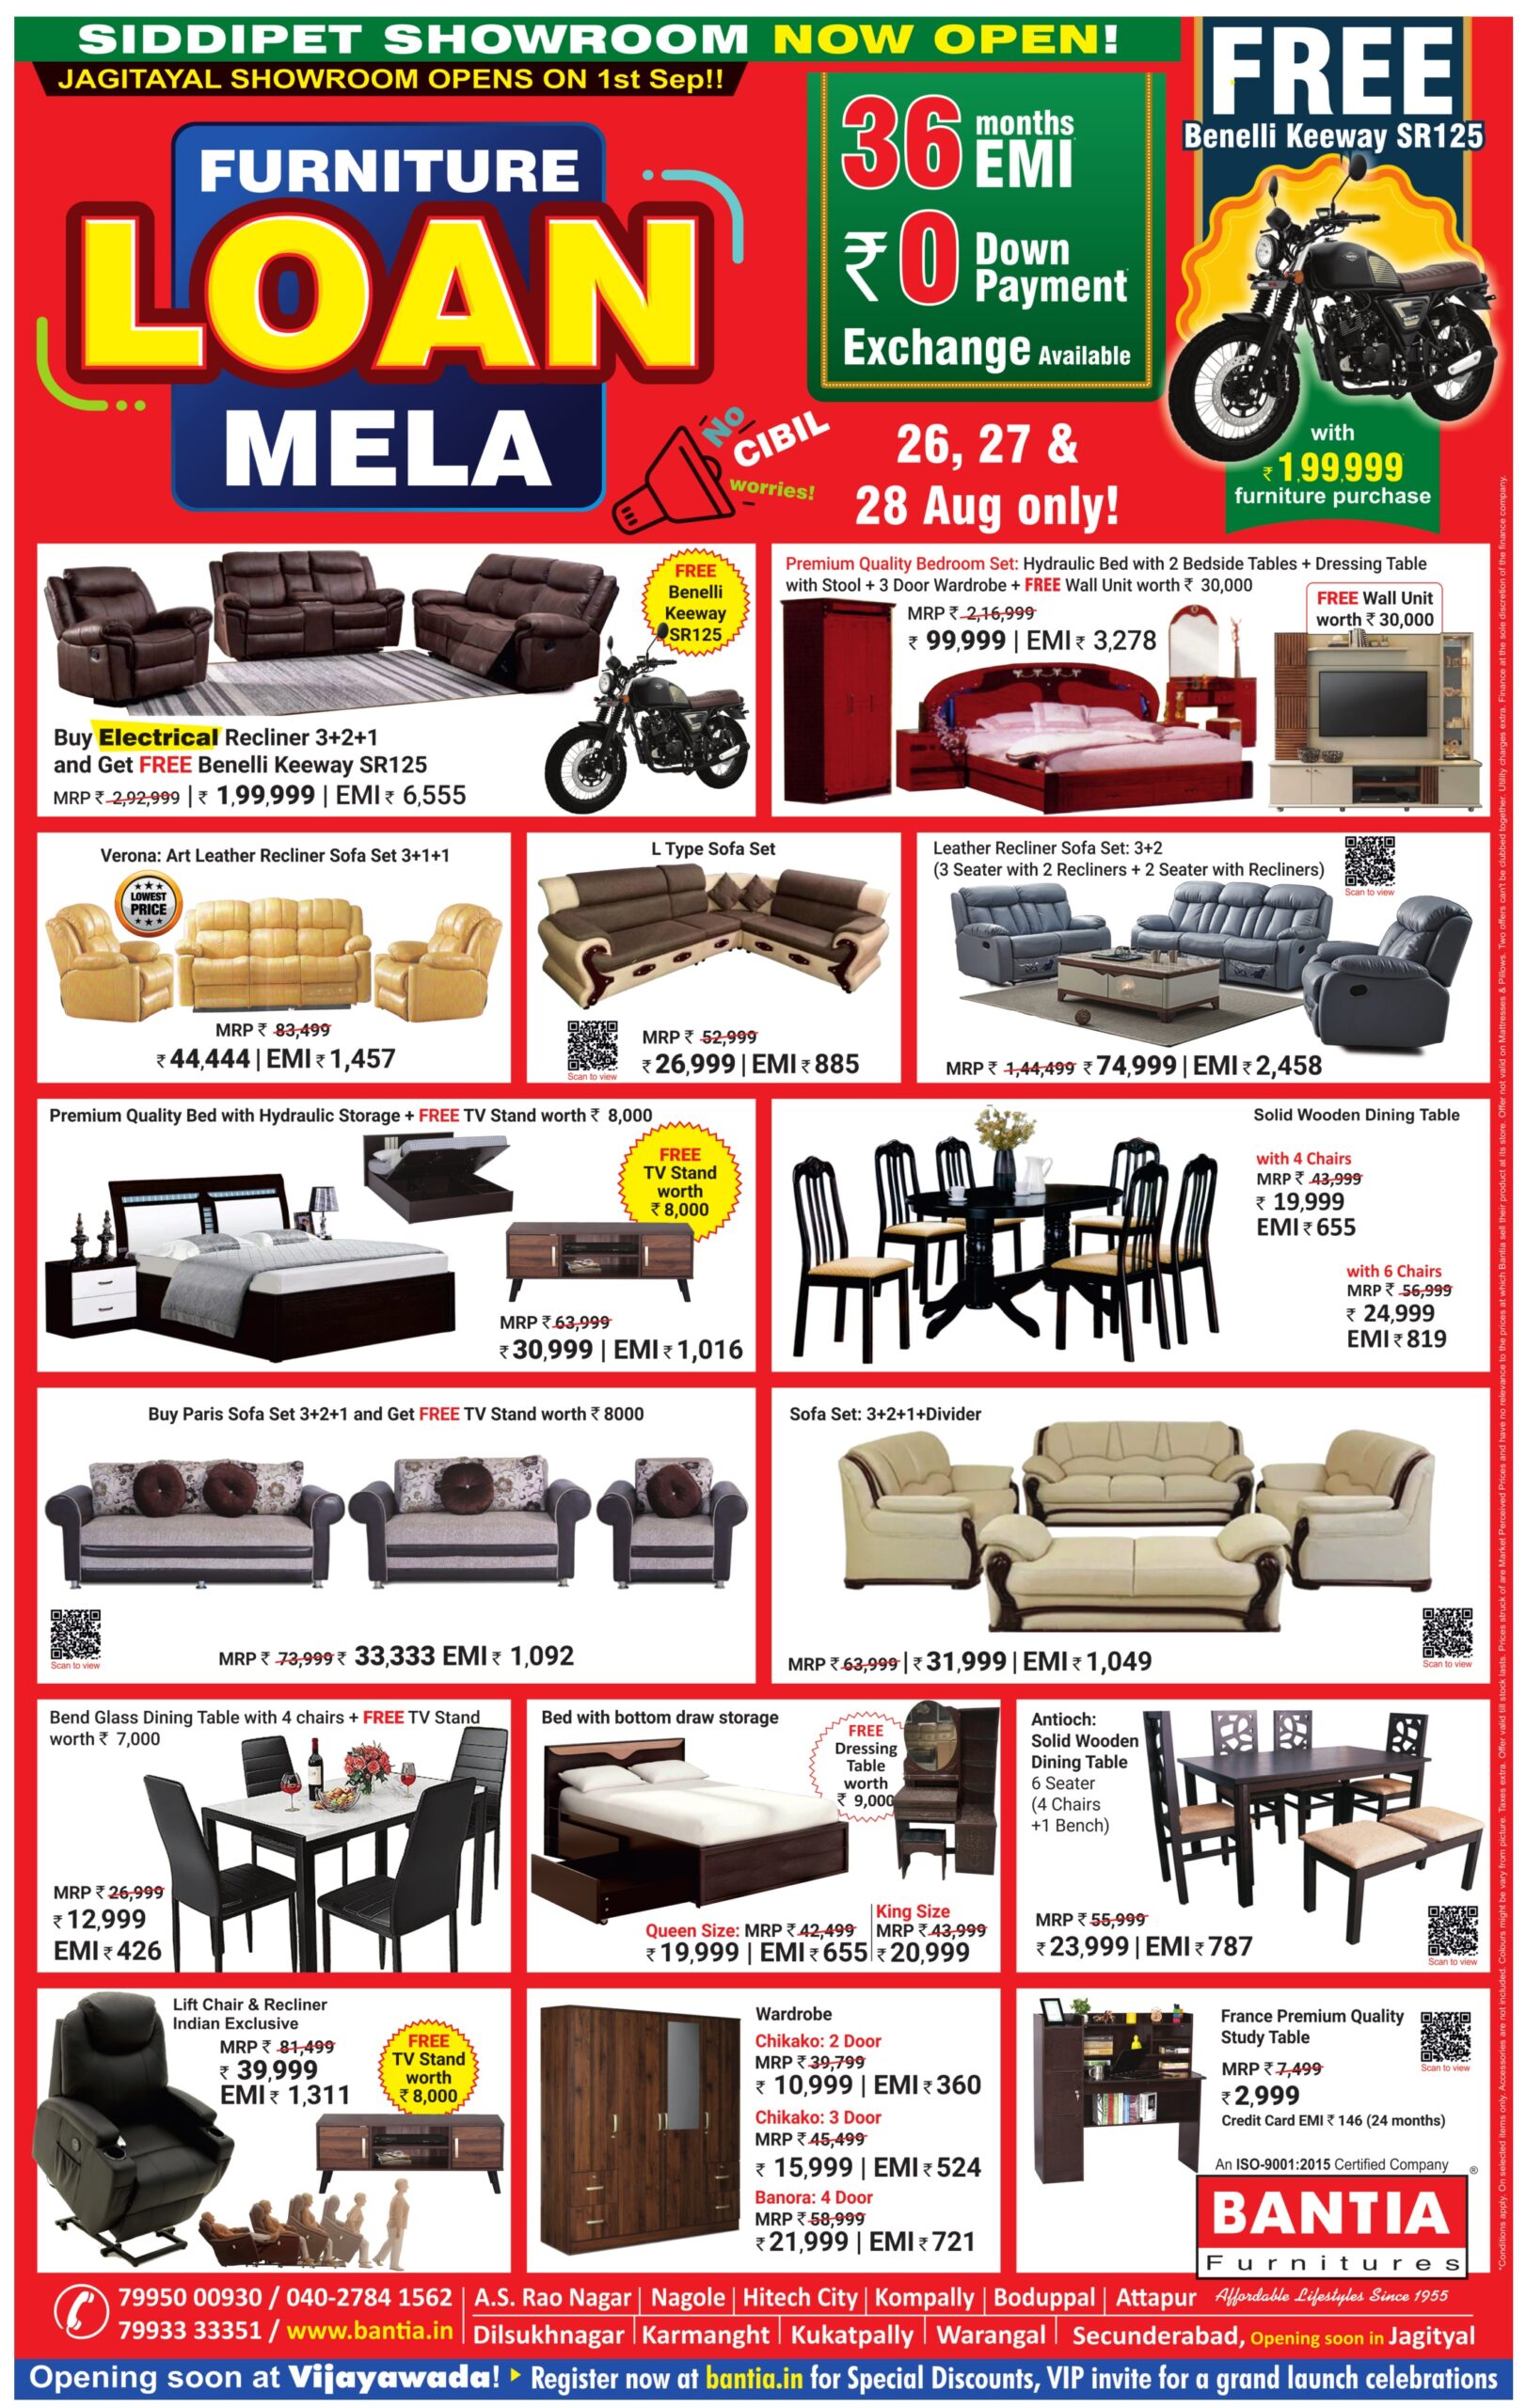 Bantia Asia’s Biggest Furniture Sale